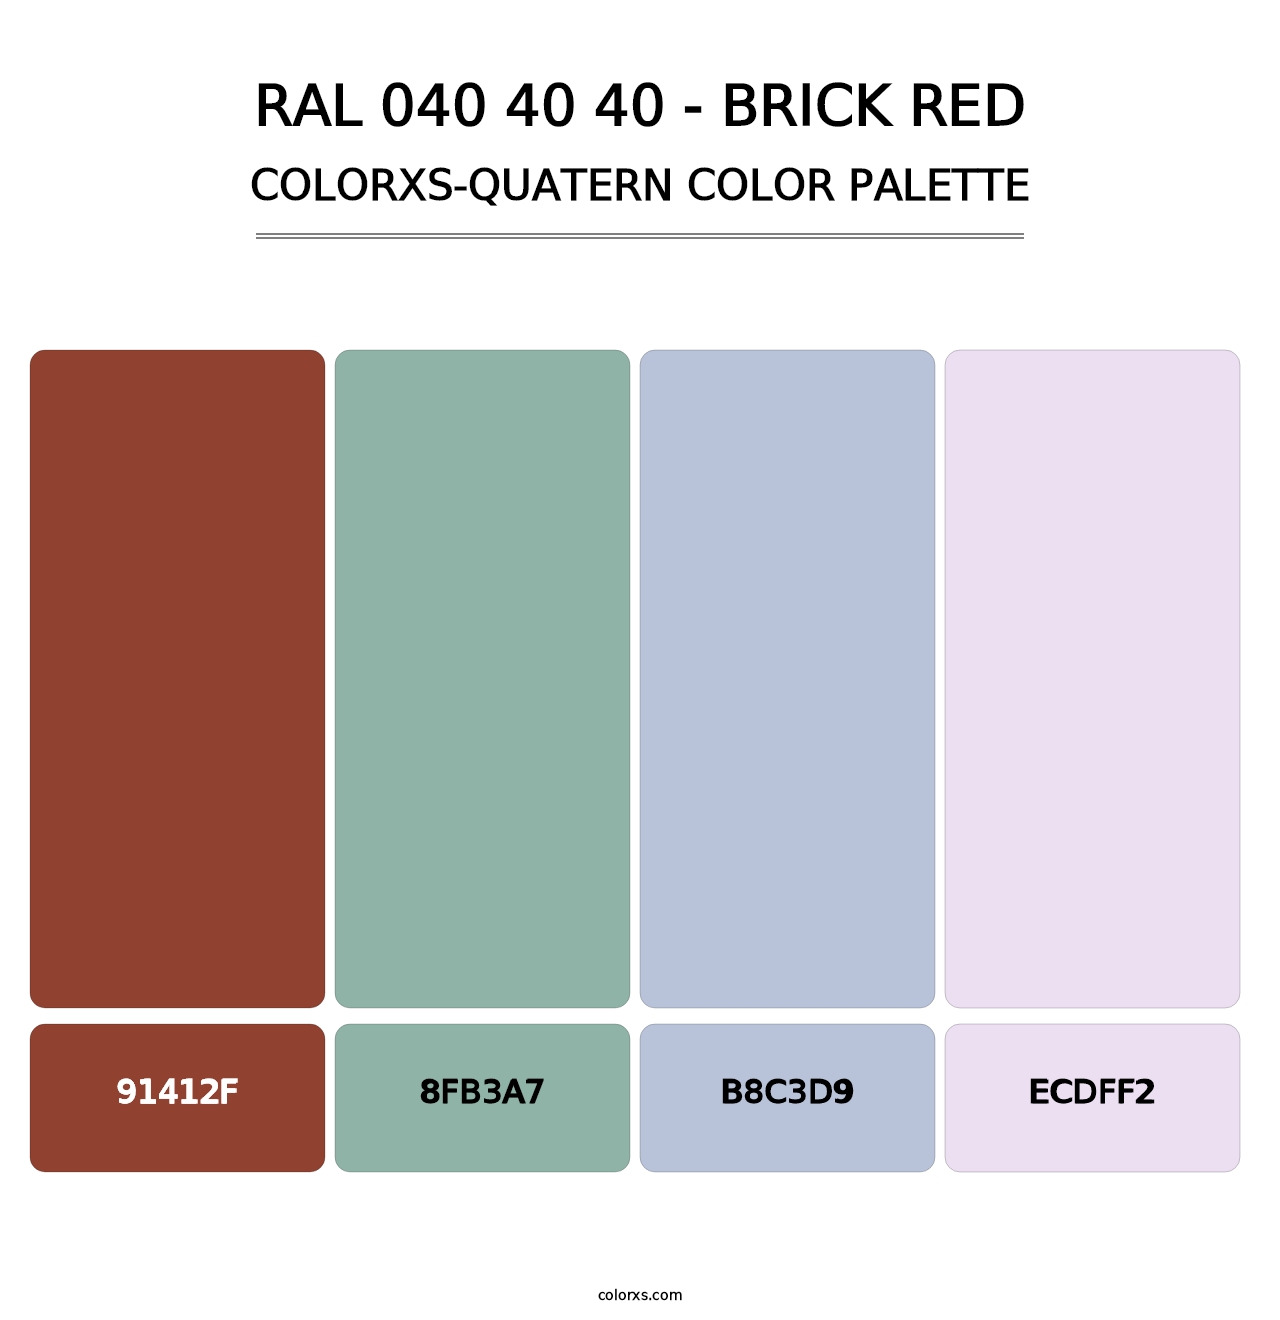 RAL 040 40 40 - Brick Red - Colorxs Quatern Palette